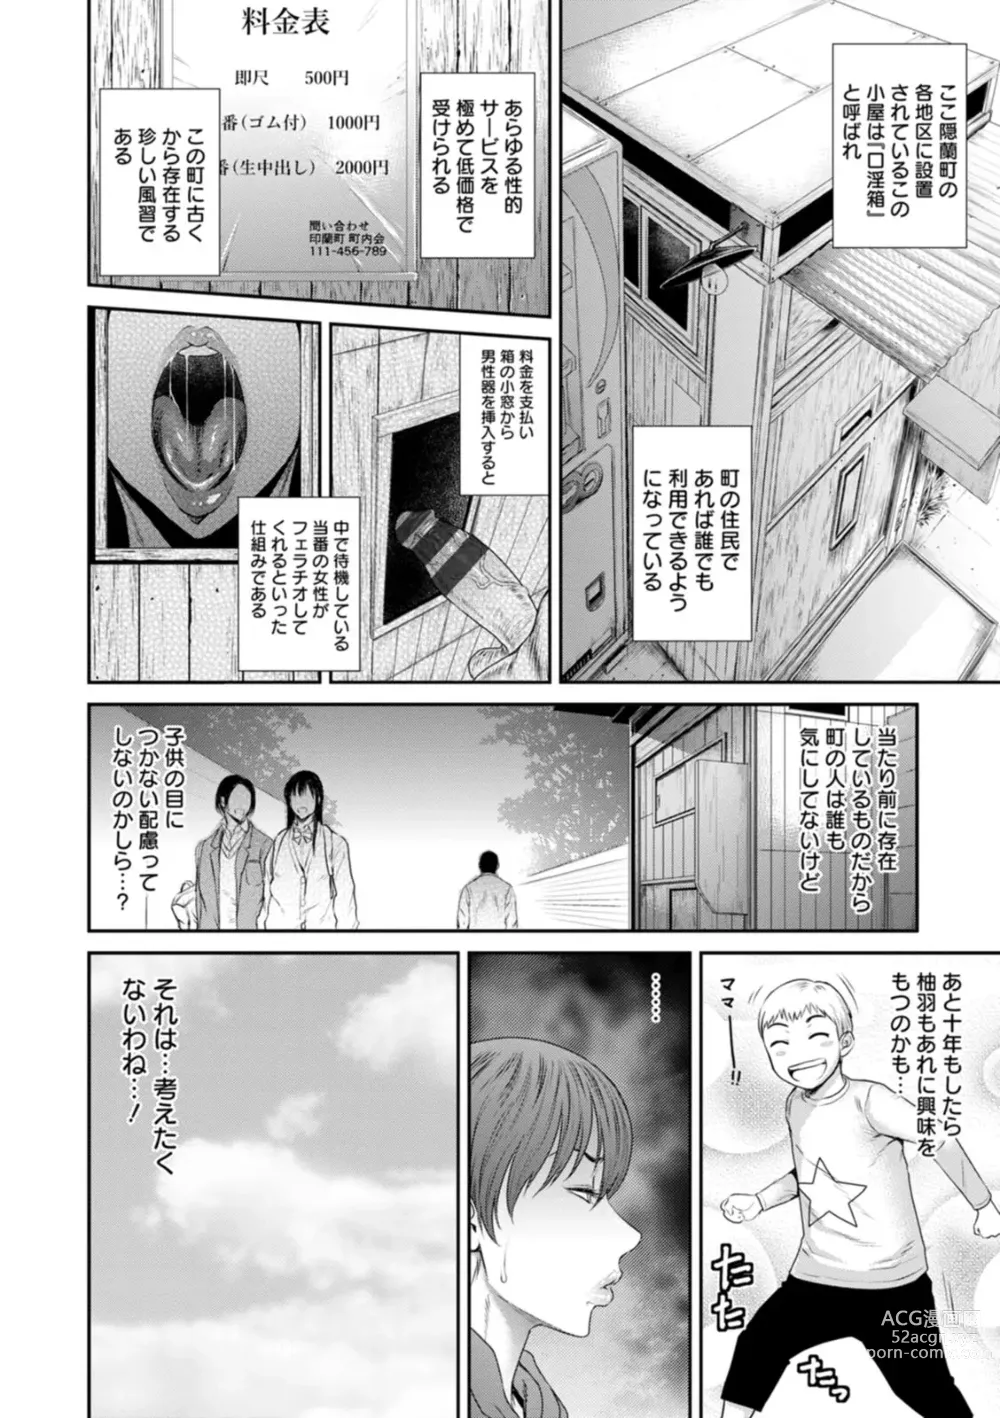 Page 8 of manga Obscene Box